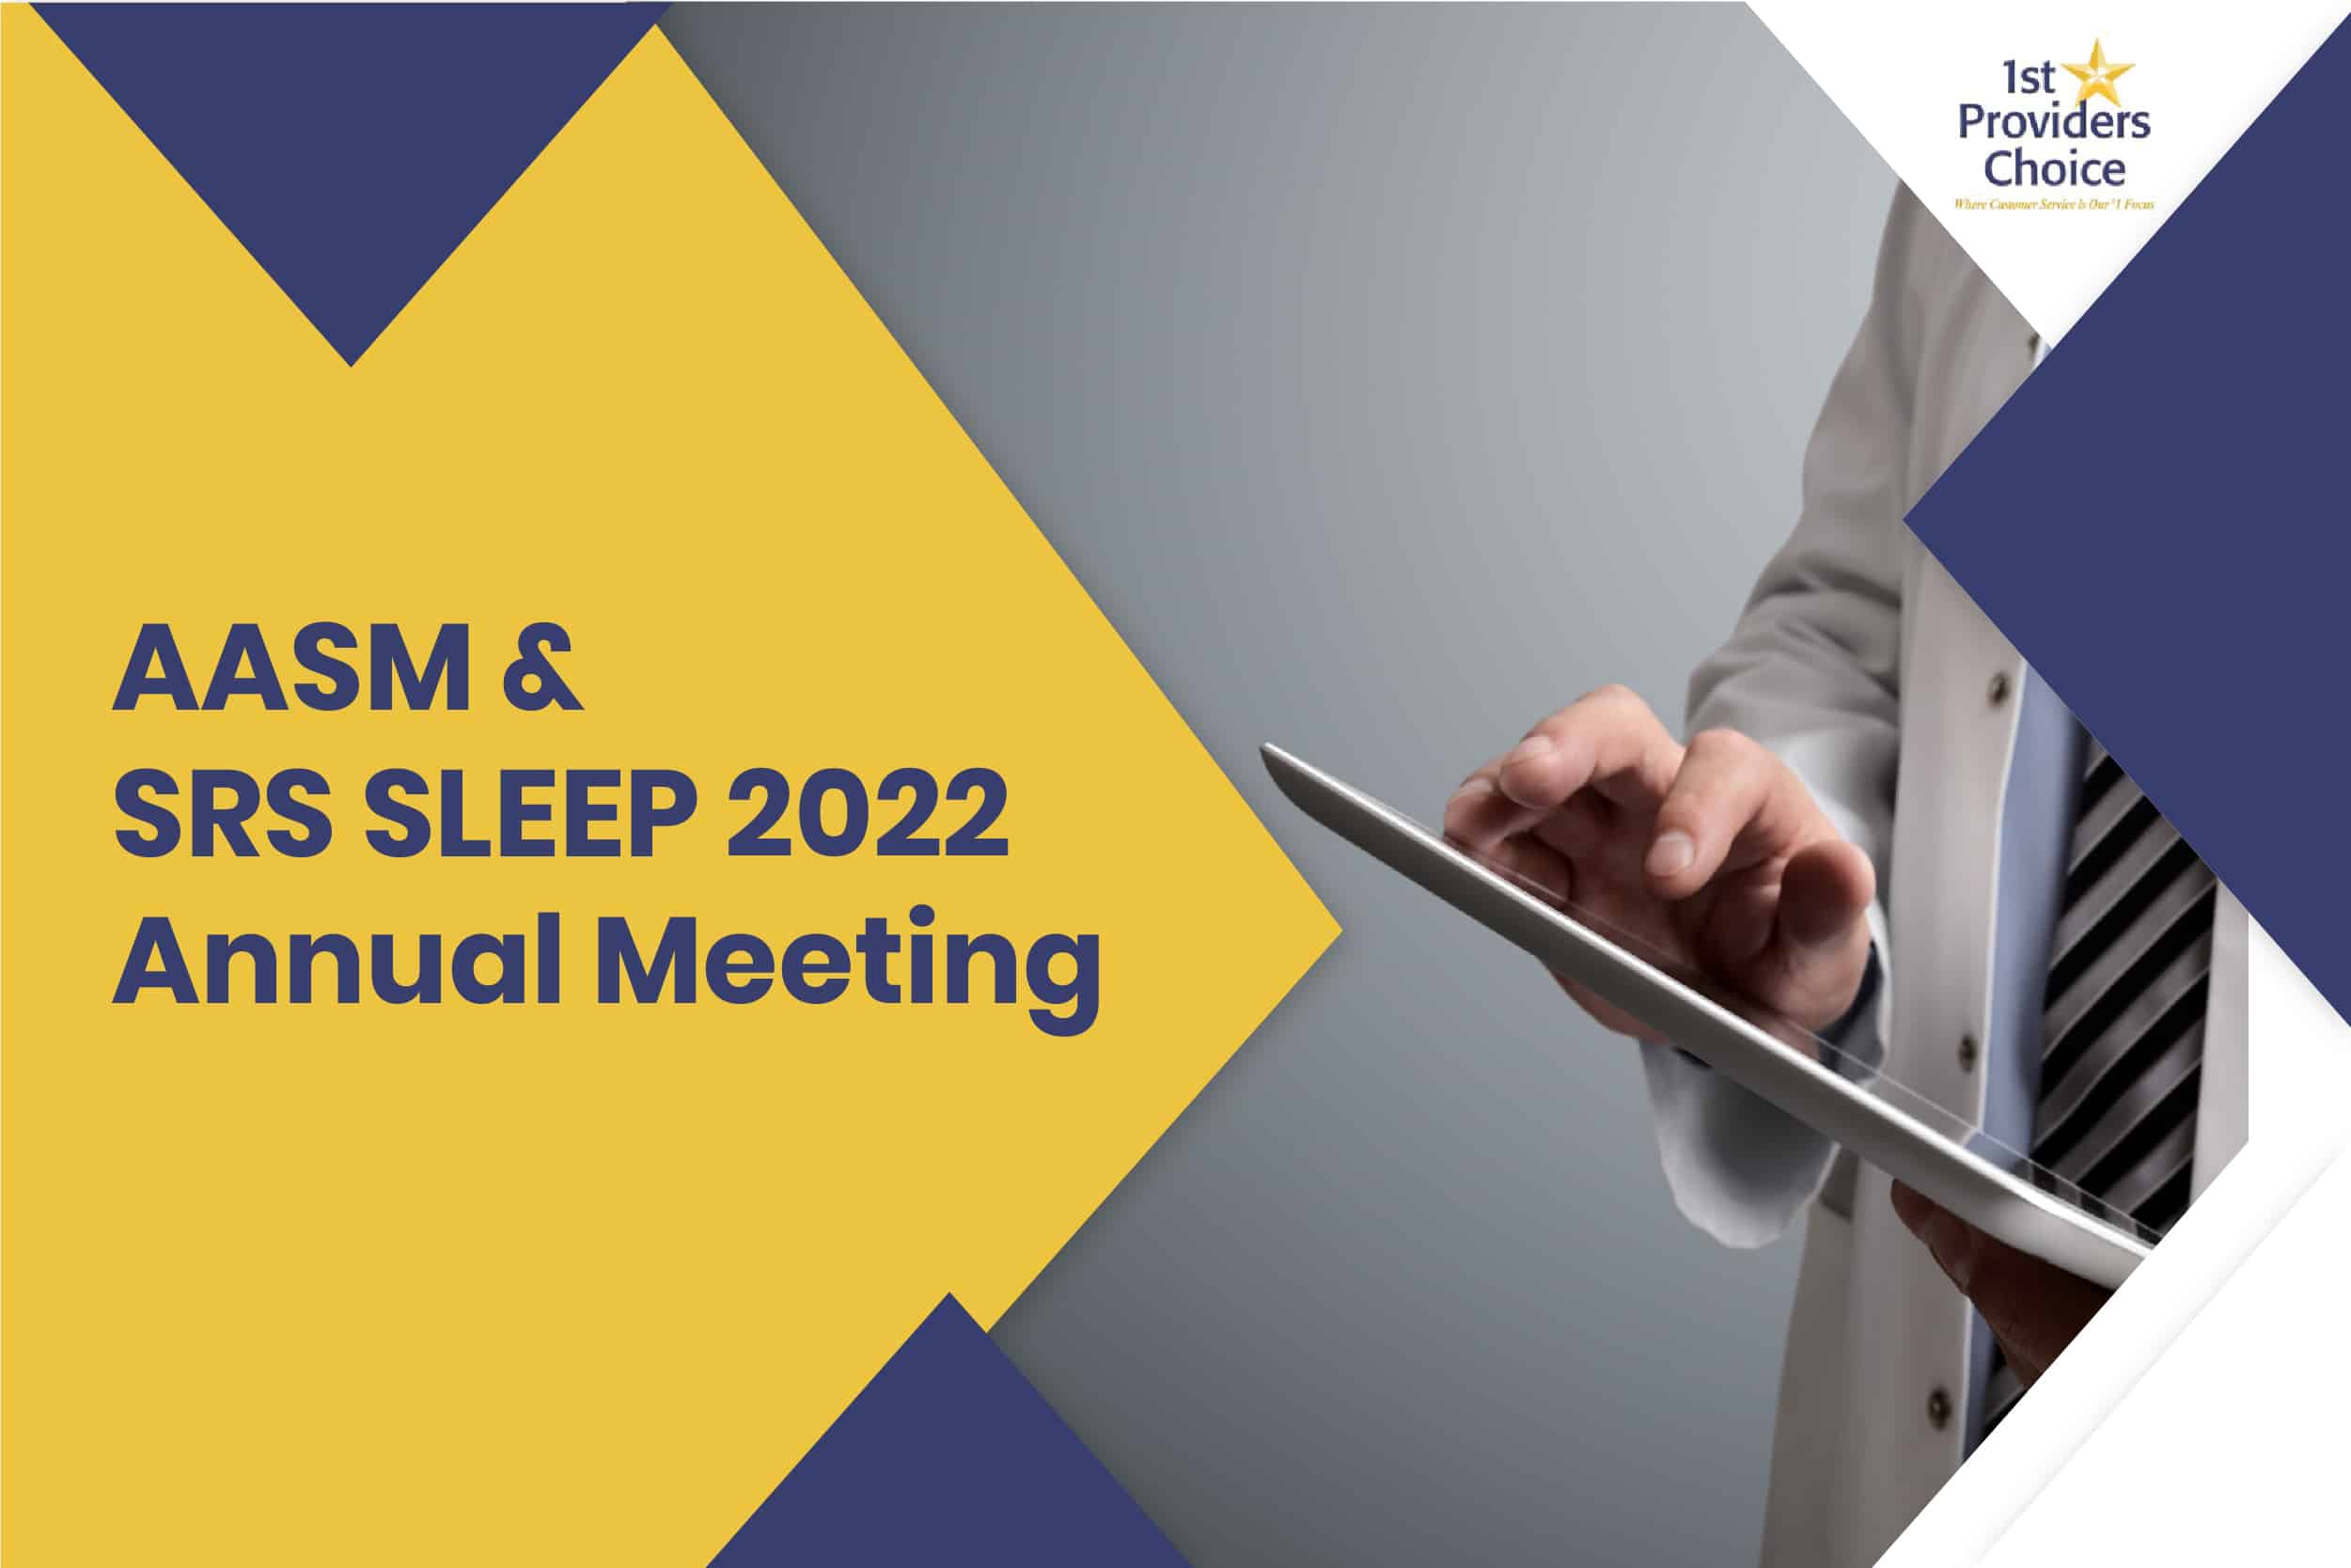 AASM & SRS SLEEP 2022 Annual Meeting 1st Providers Choice